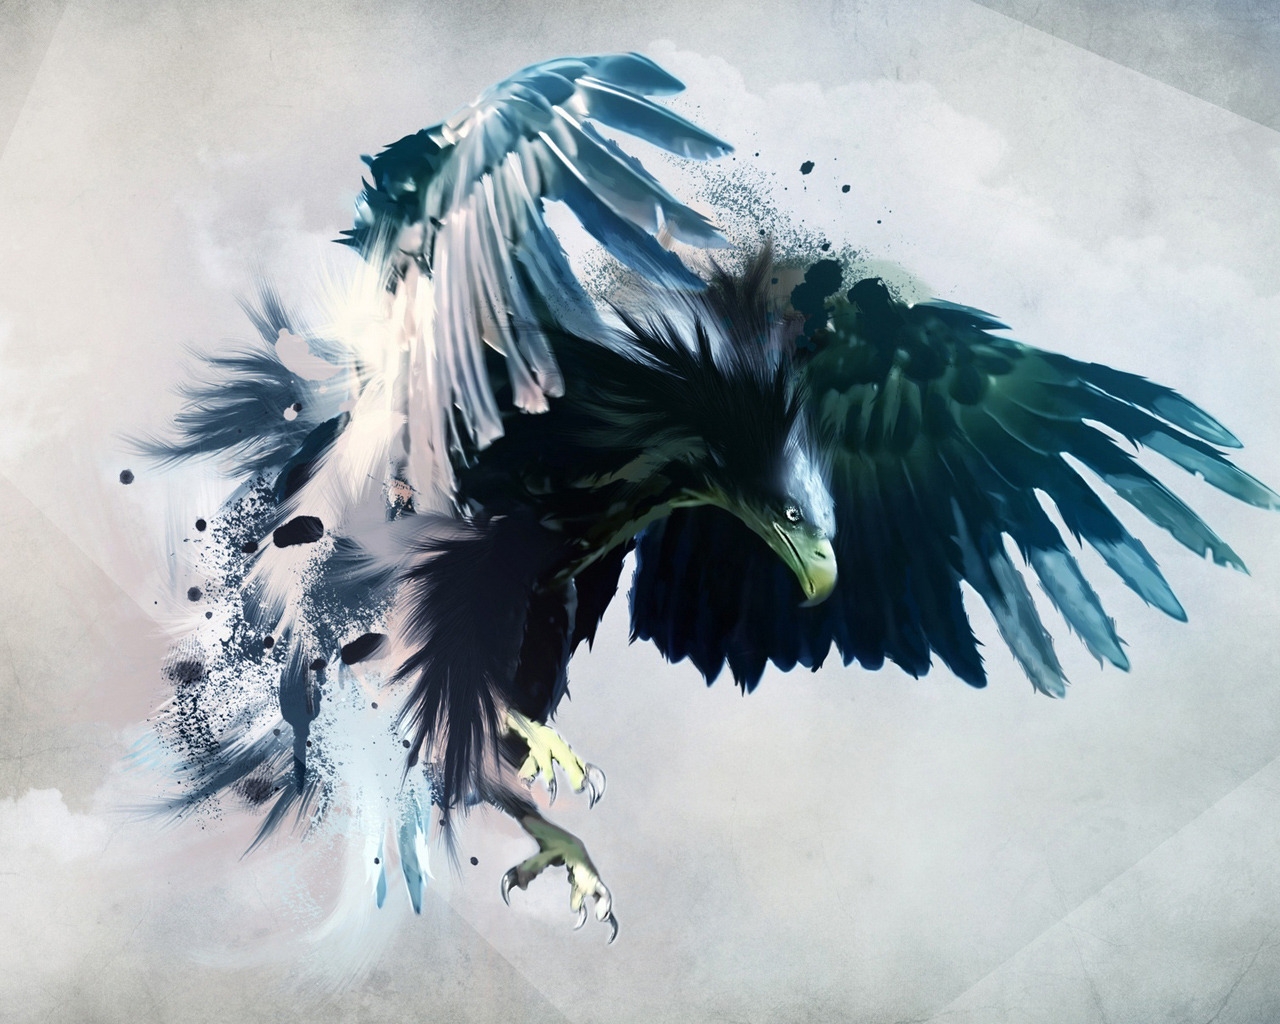 Digital Eagle for 1280 x 1024 resolution